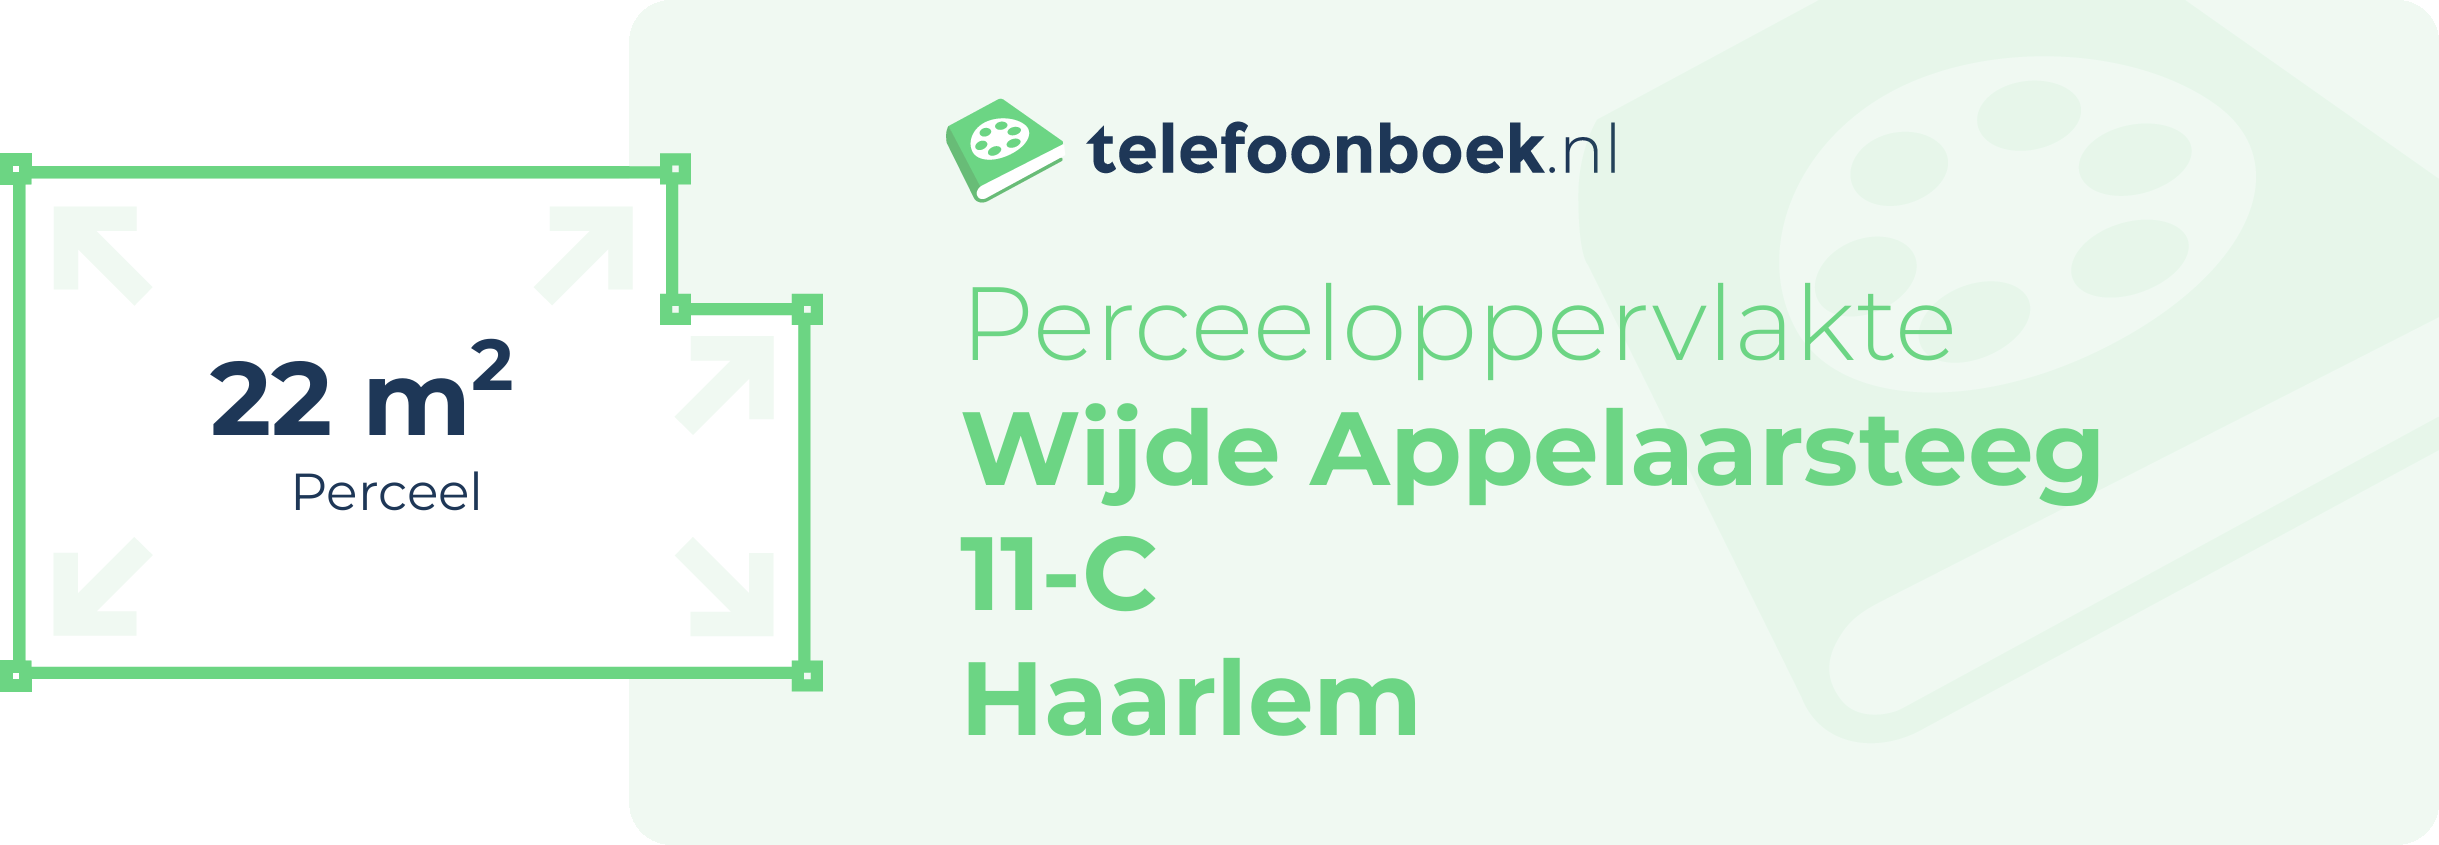 Perceeloppervlakte Wijde Appelaarsteeg 11-C Haarlem